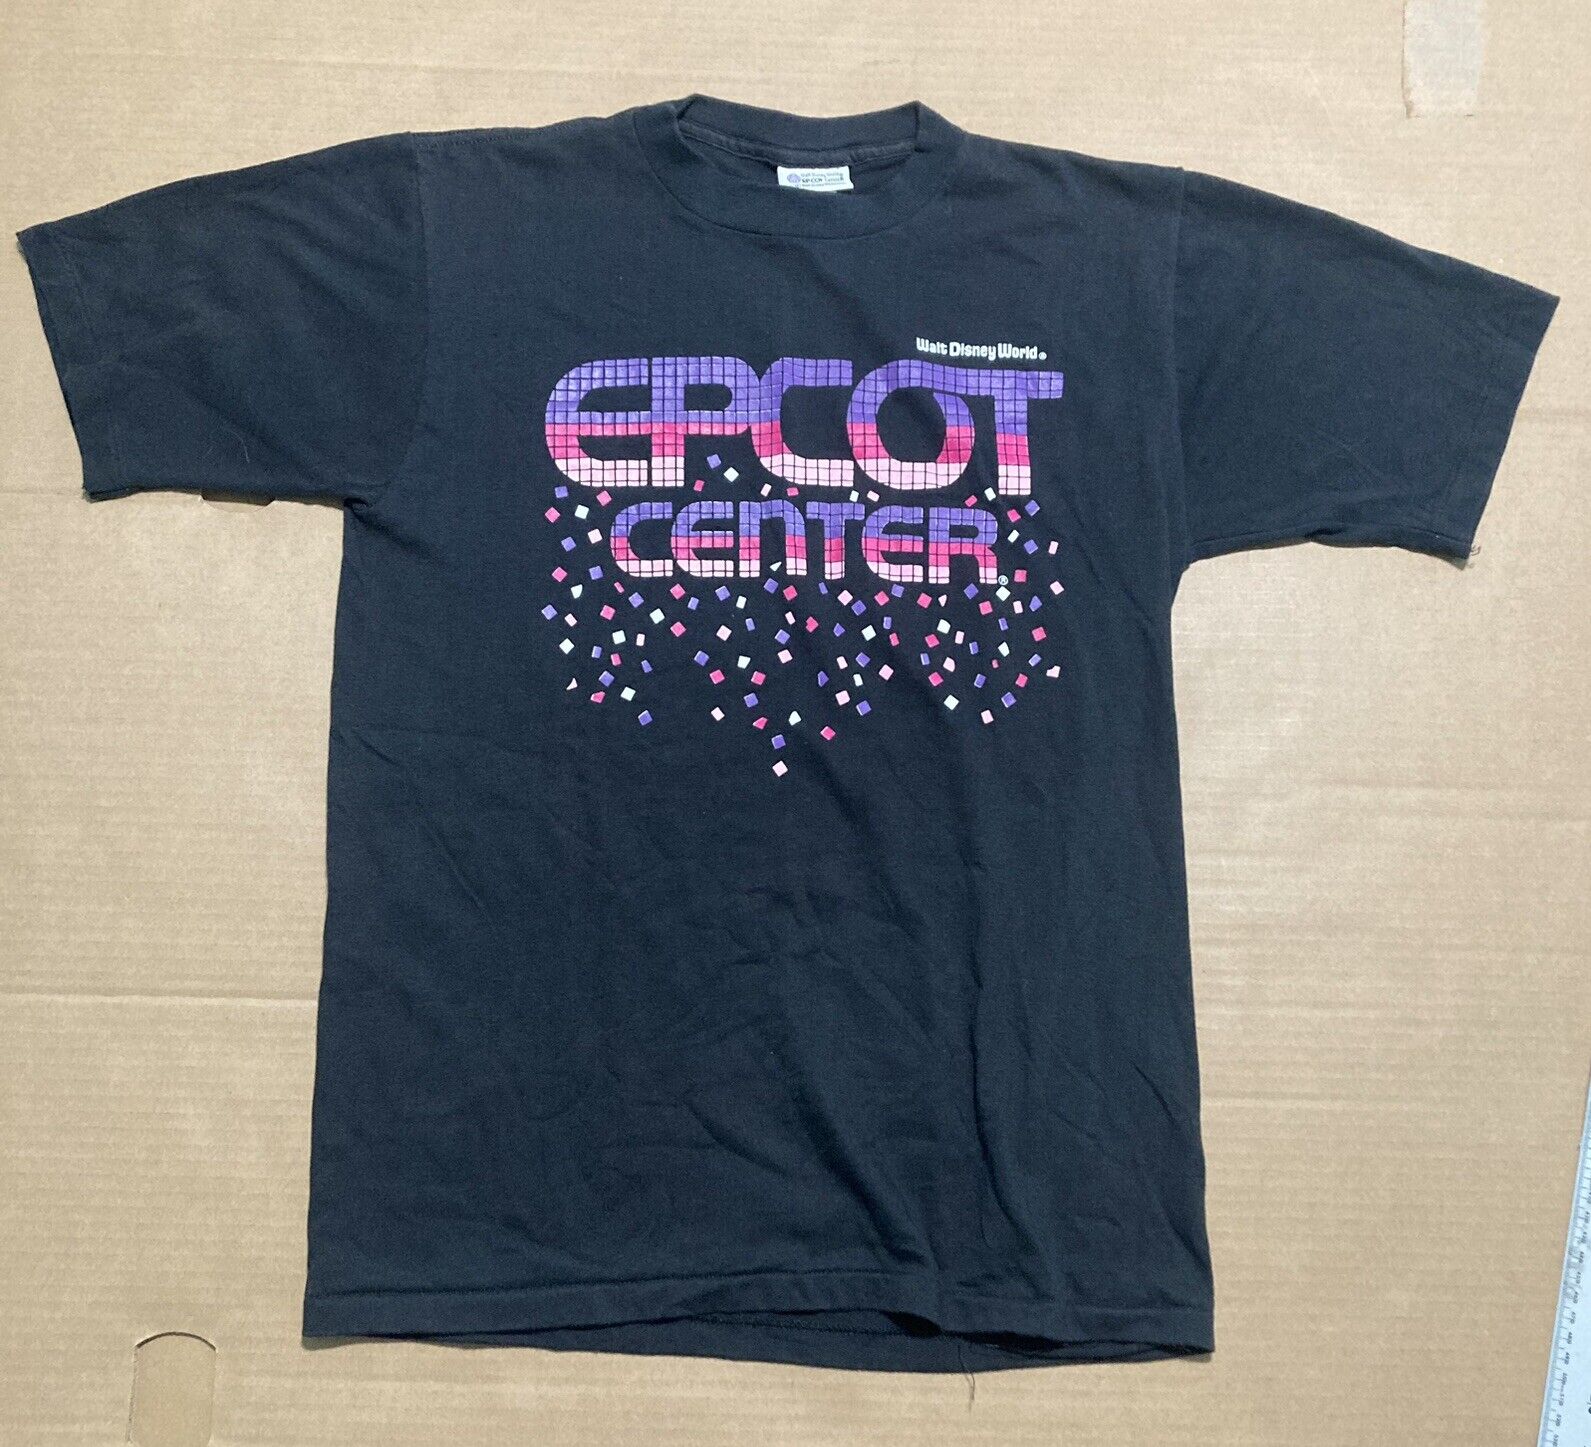 Vintage 1982 Walt Disney World Epcot Center Confetti Design T-shirt Adult Large